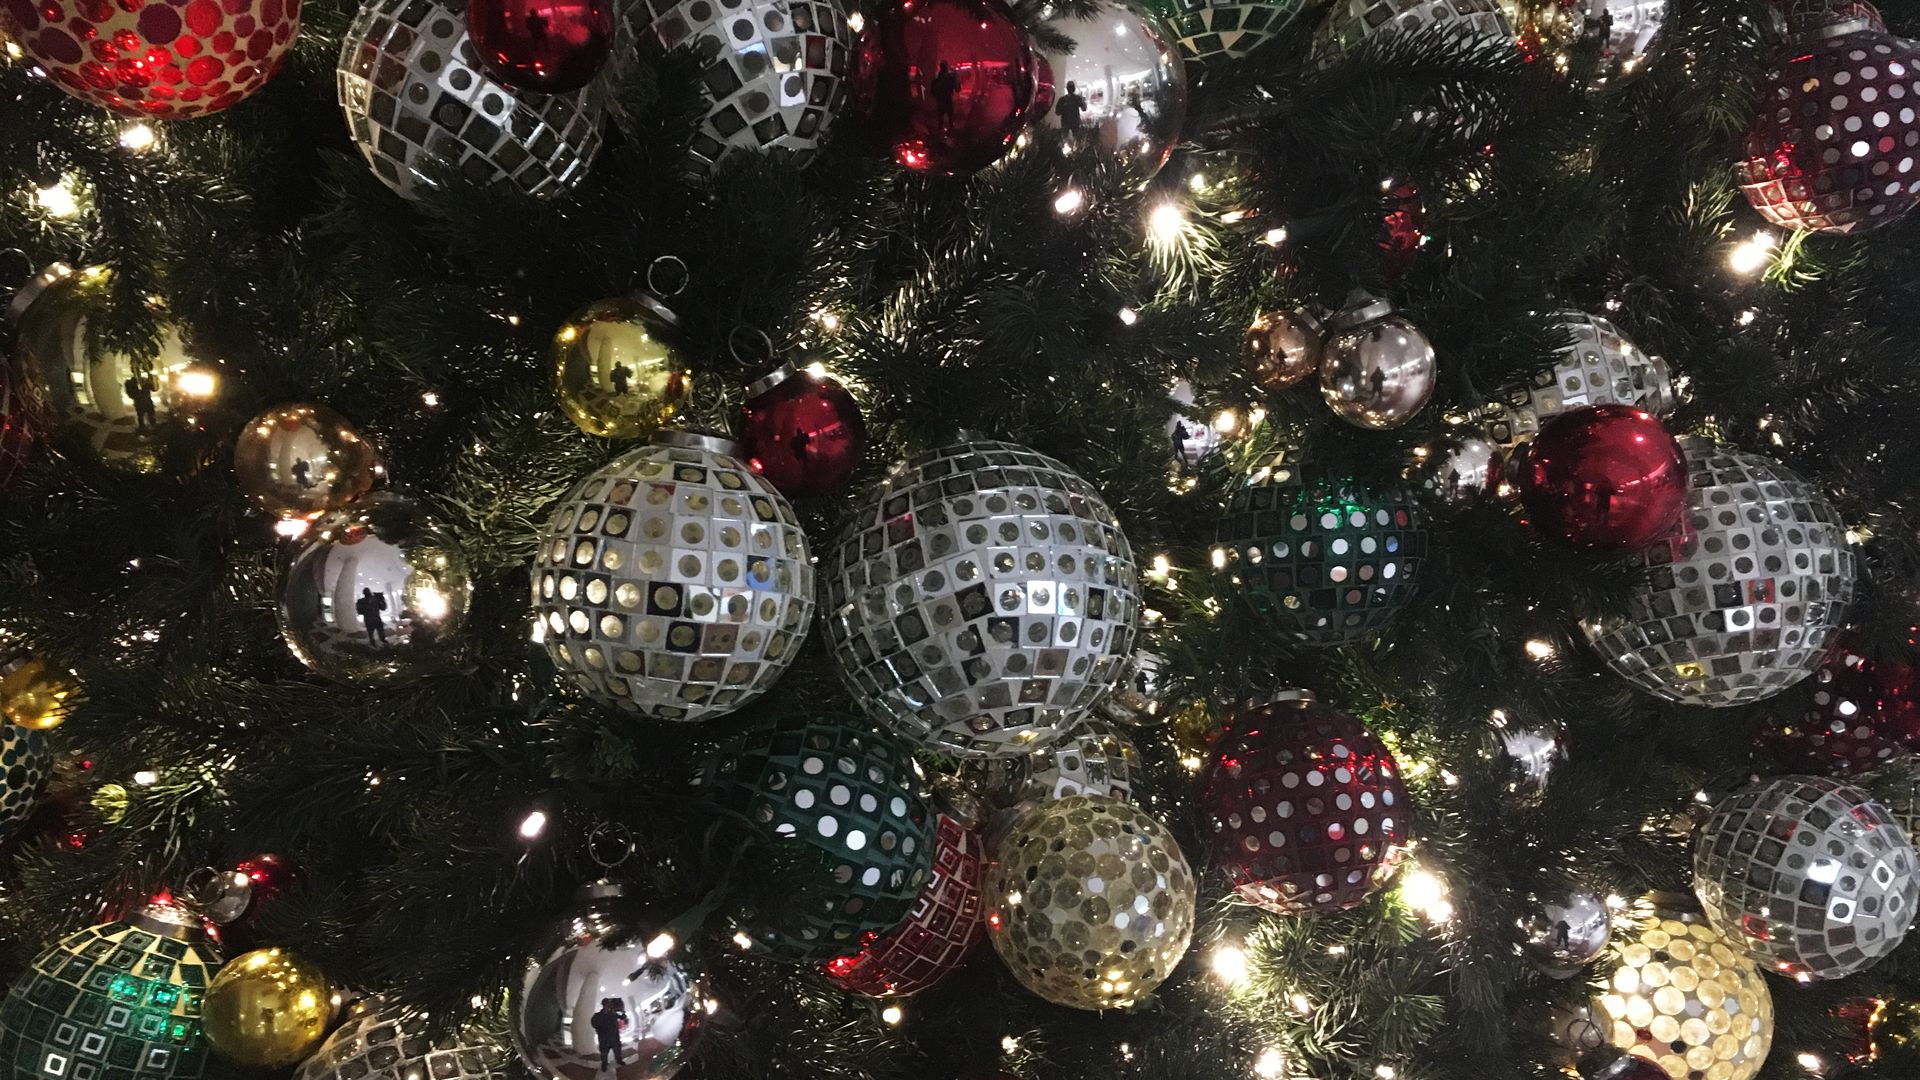 Christmas ornaments 